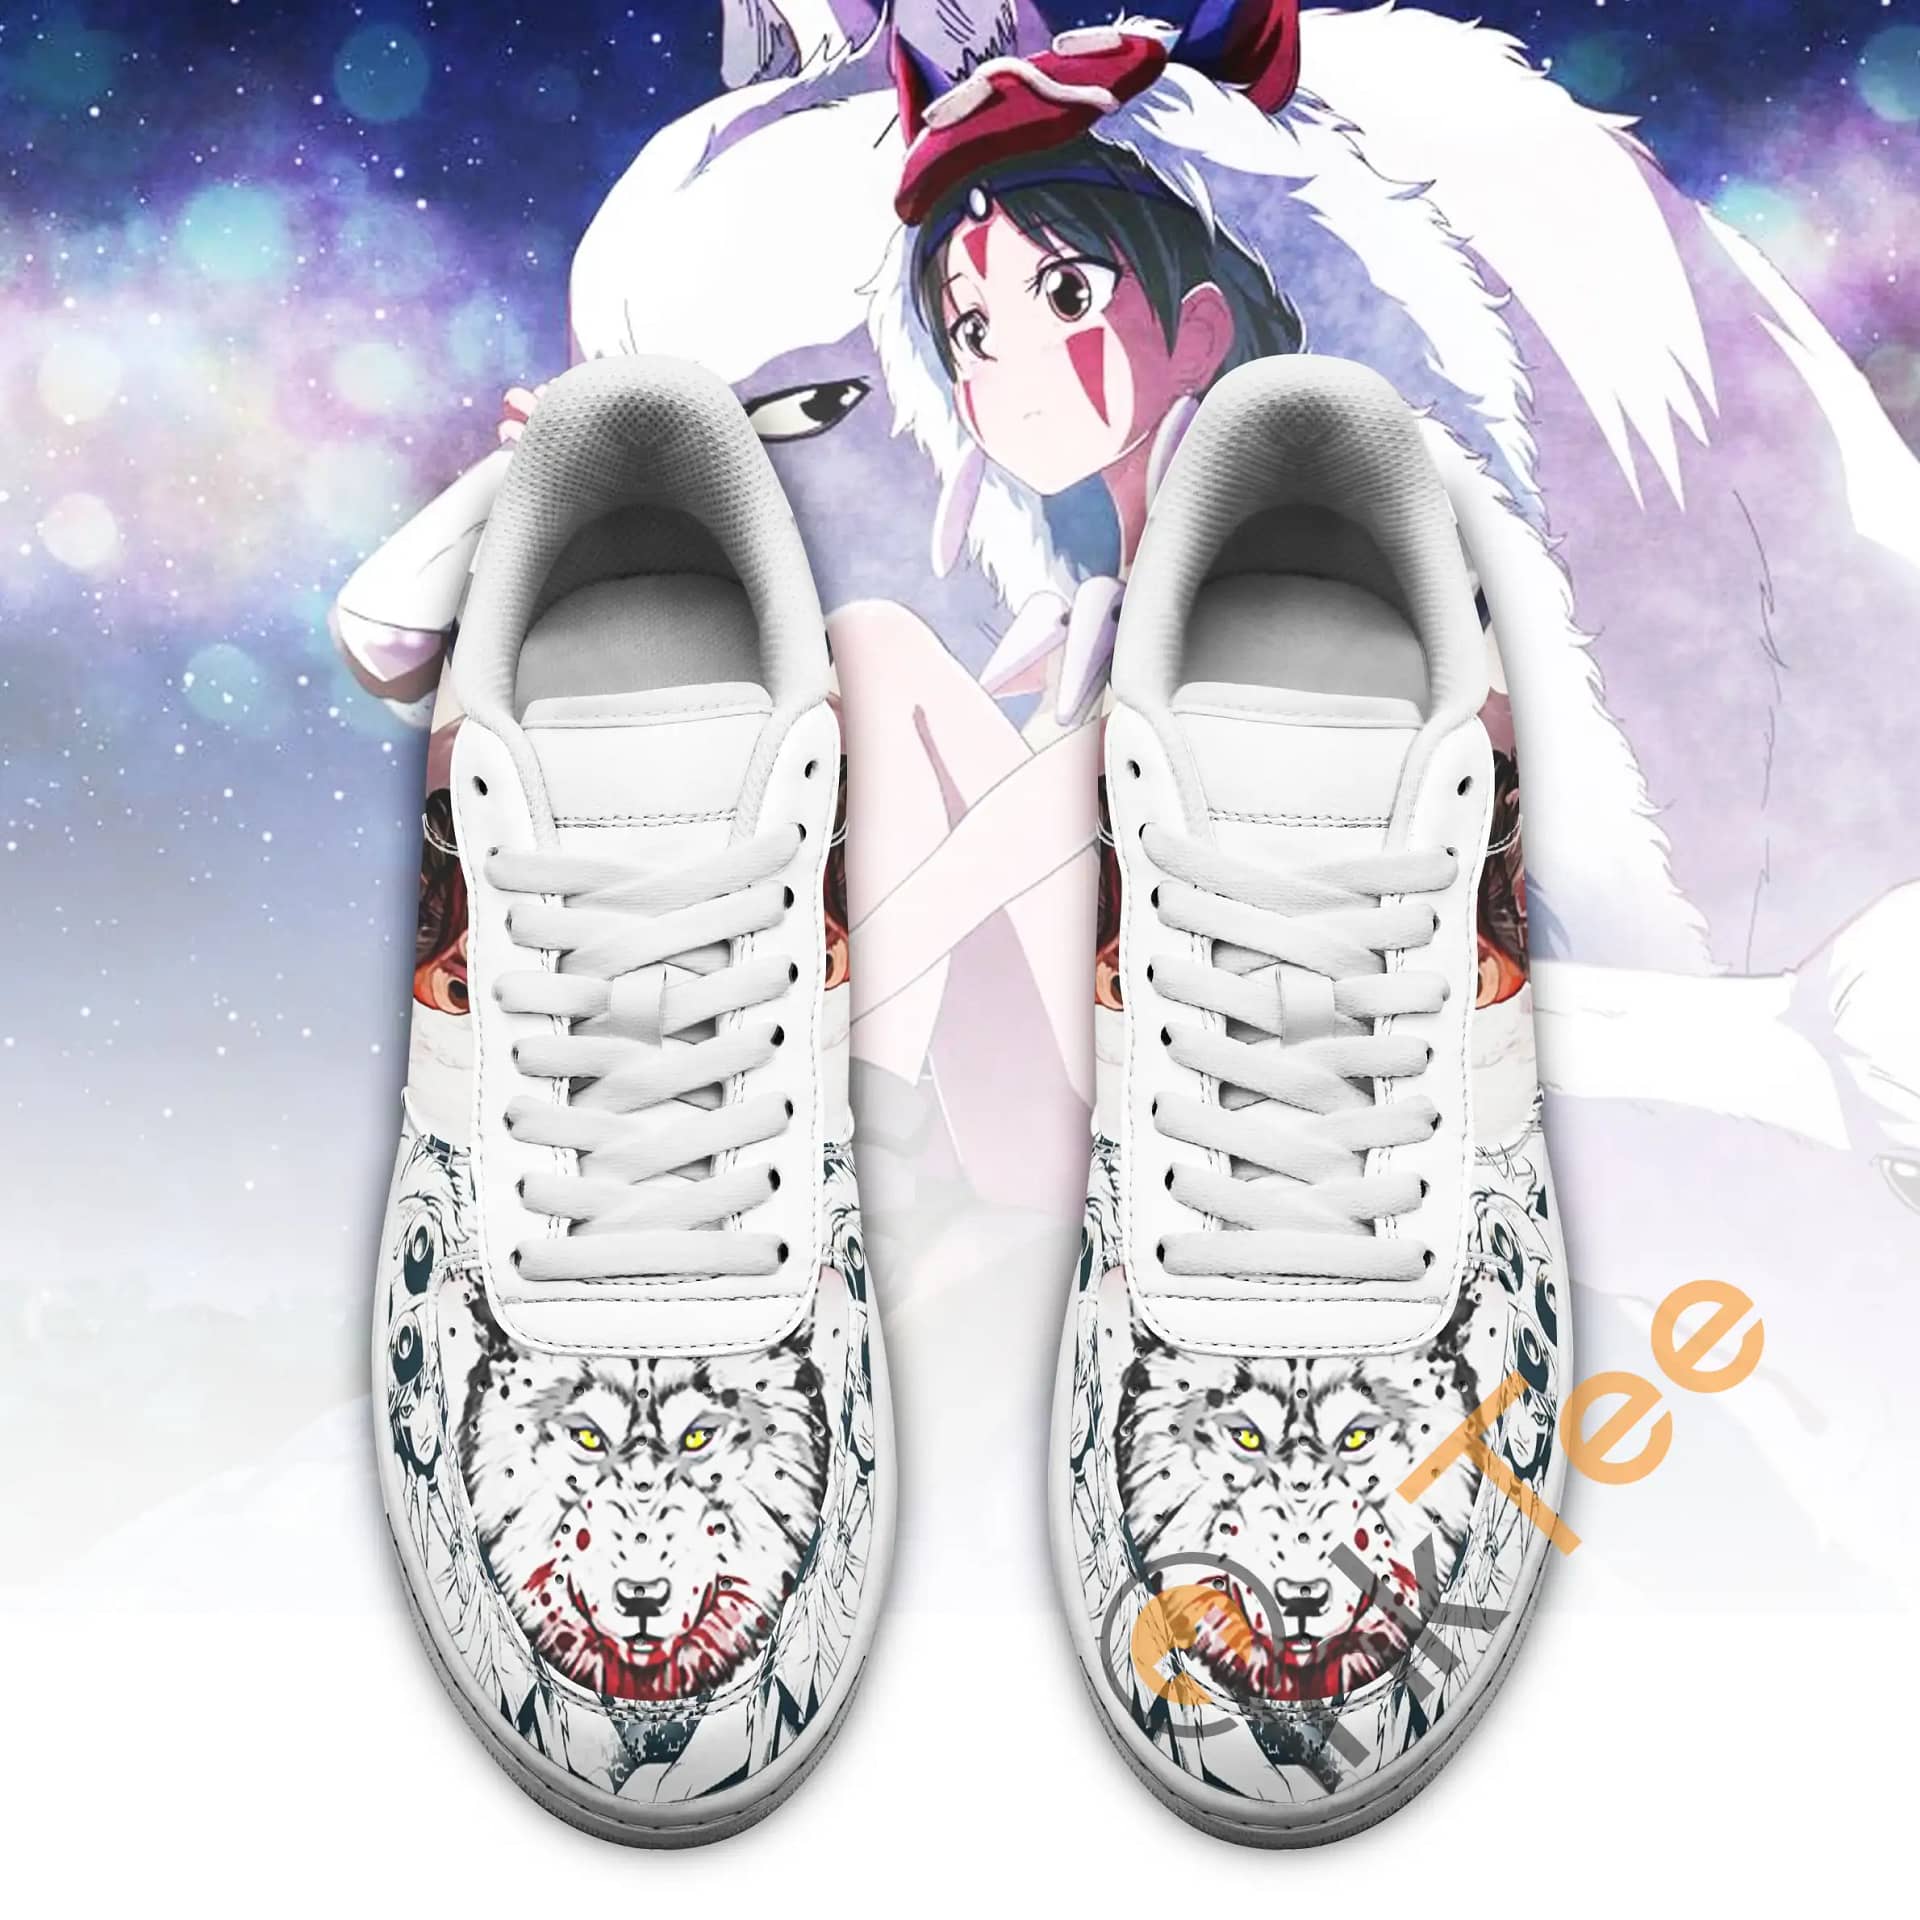 Princess Mononoke Anime Costume Amazon Nike Air Force Shoes